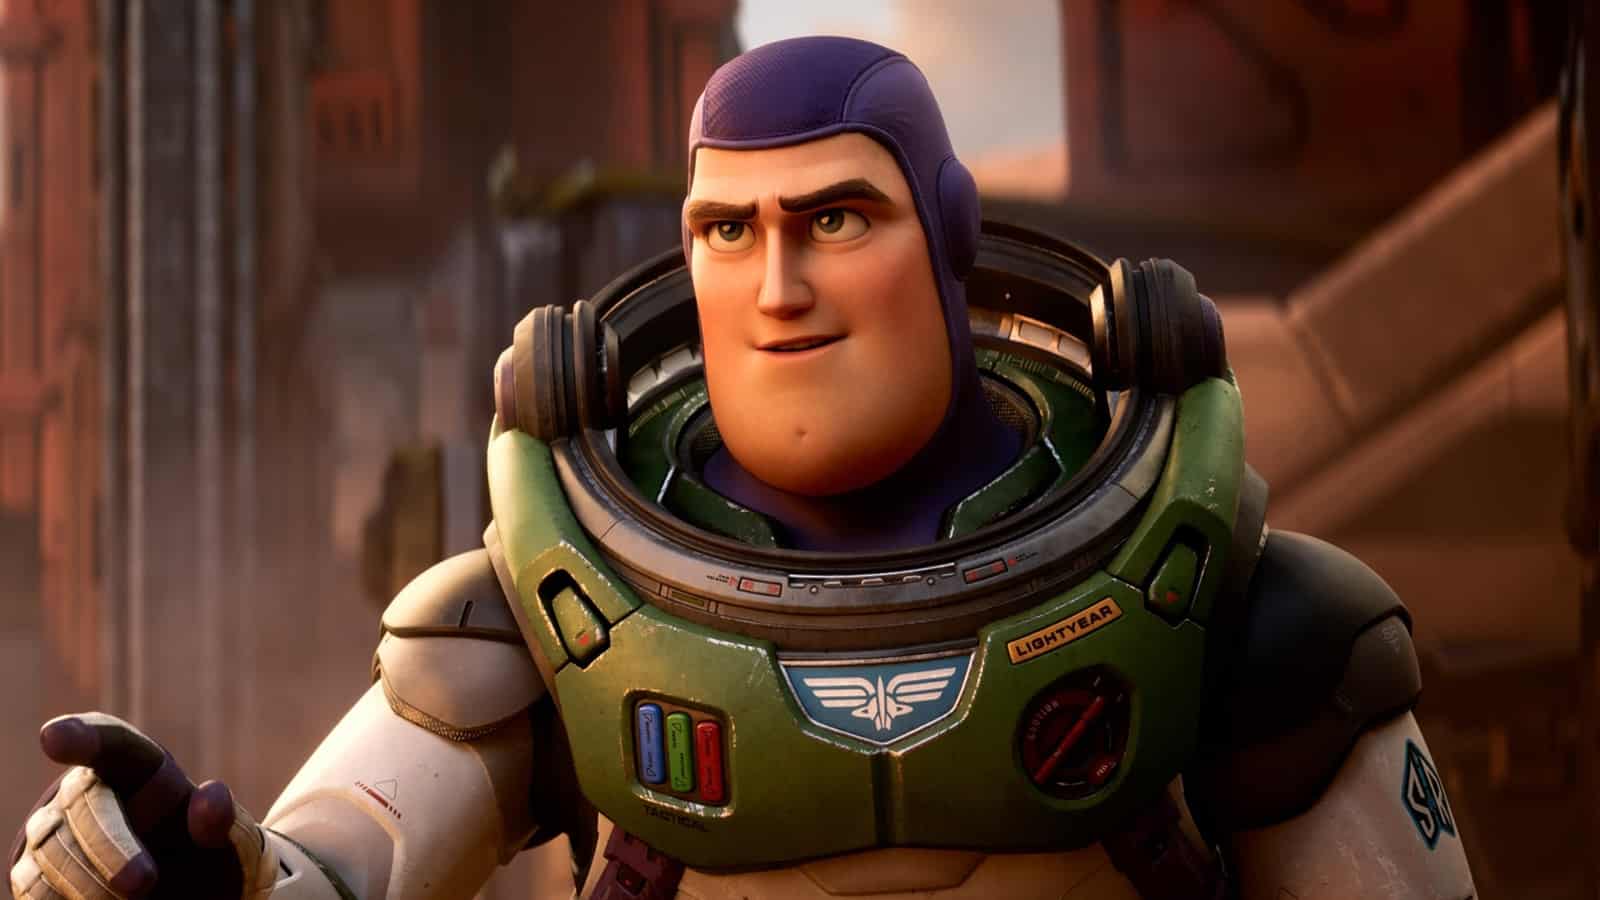 An image of Buzz Lightyear